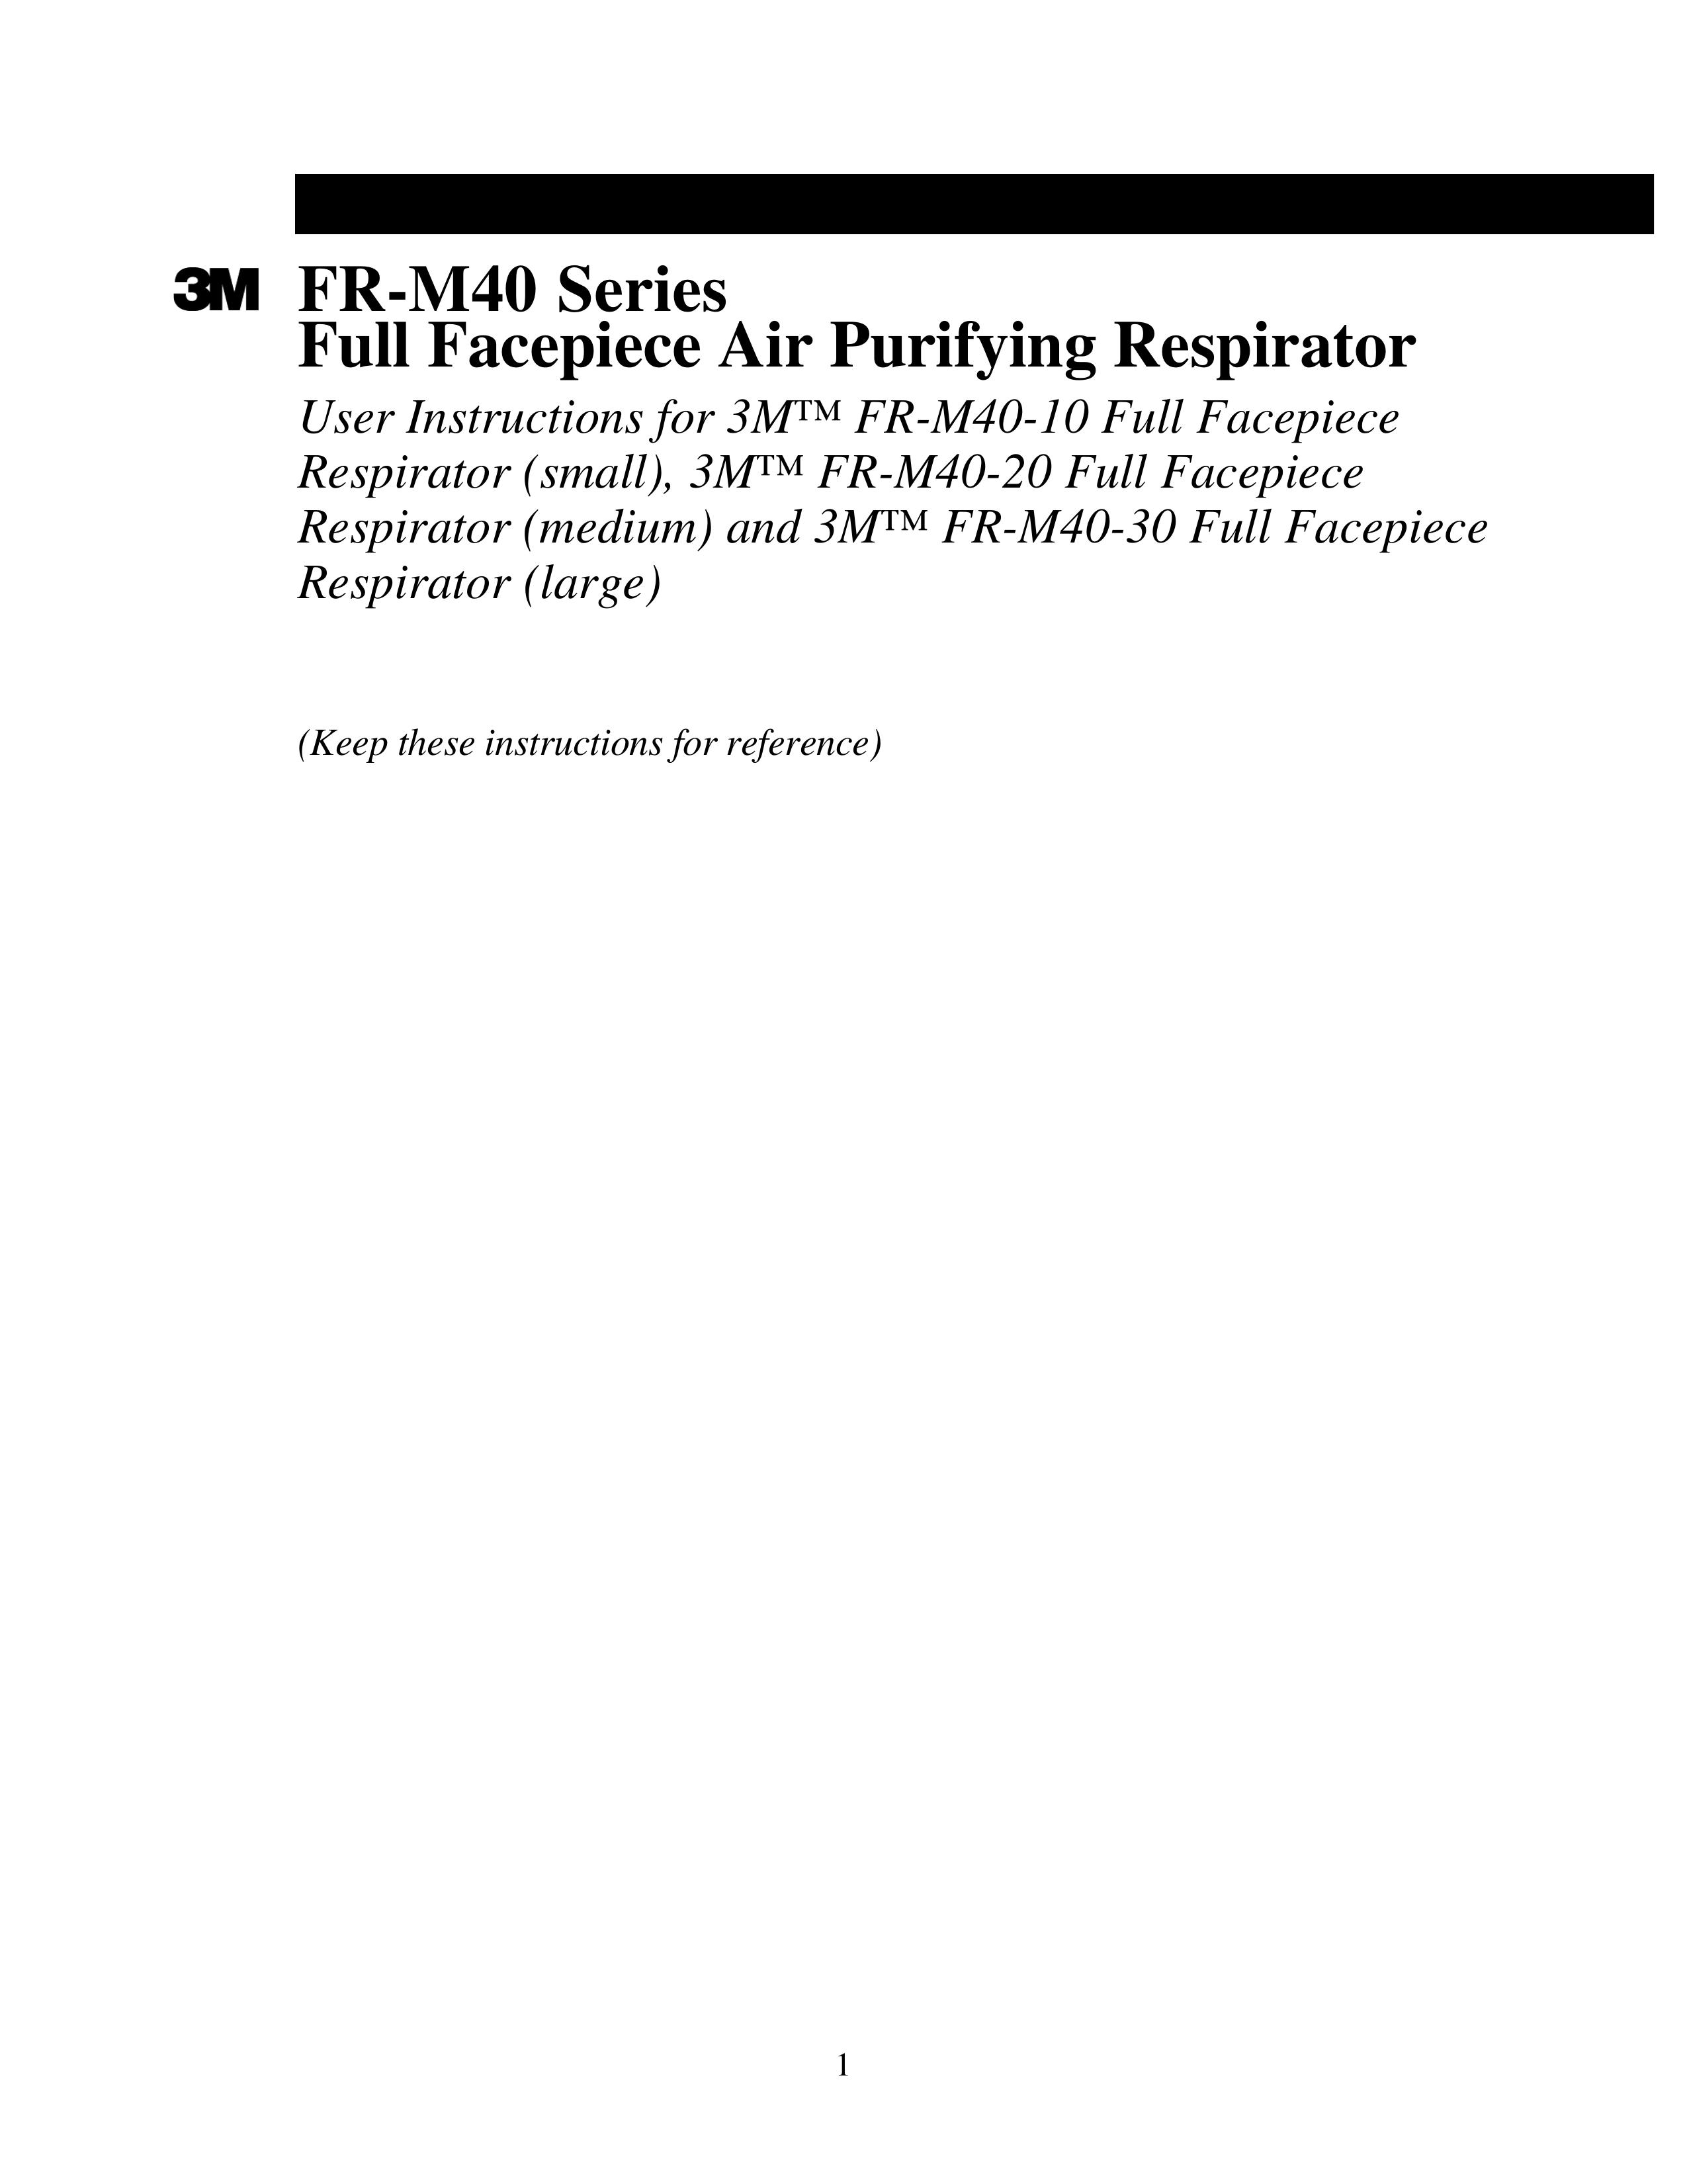 3M FR-M40 Respiratory Product User Manual